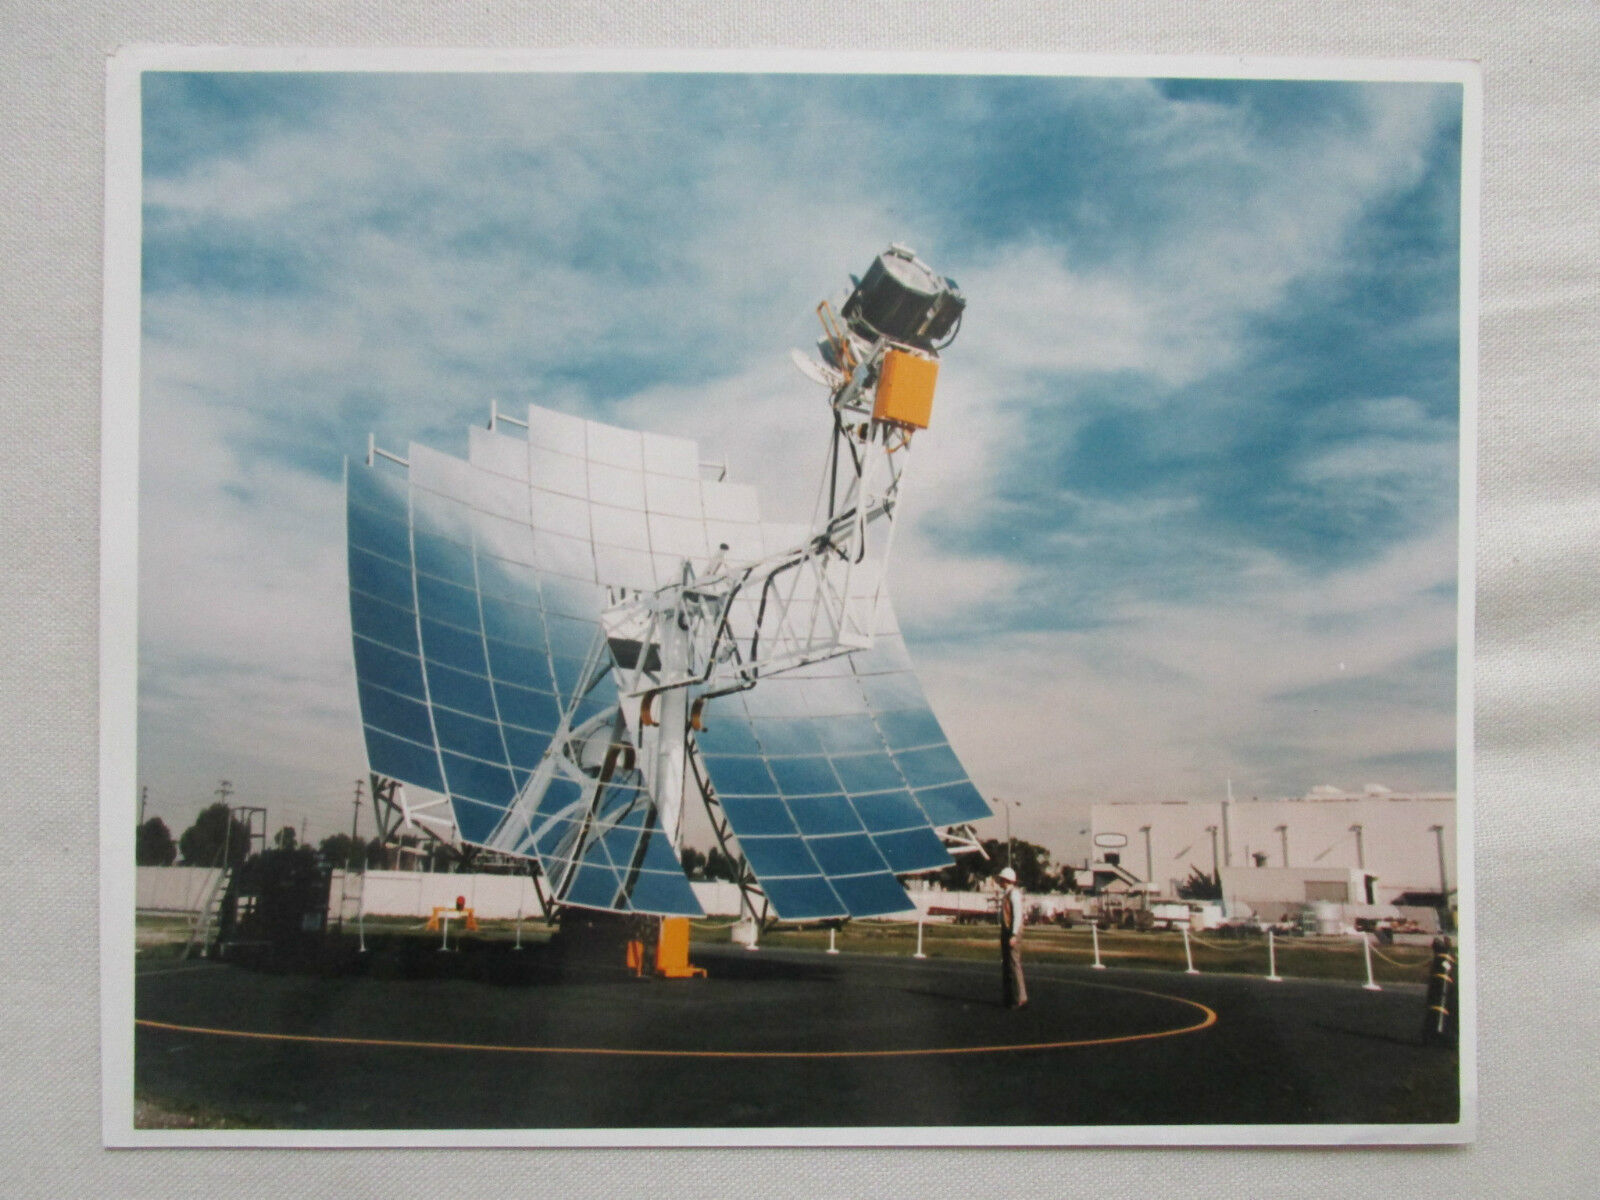 6/1985 PHOTO PRESS MCDONNELL DOUGLAS DISH STIRLING SOLAR POWER SYSTEM